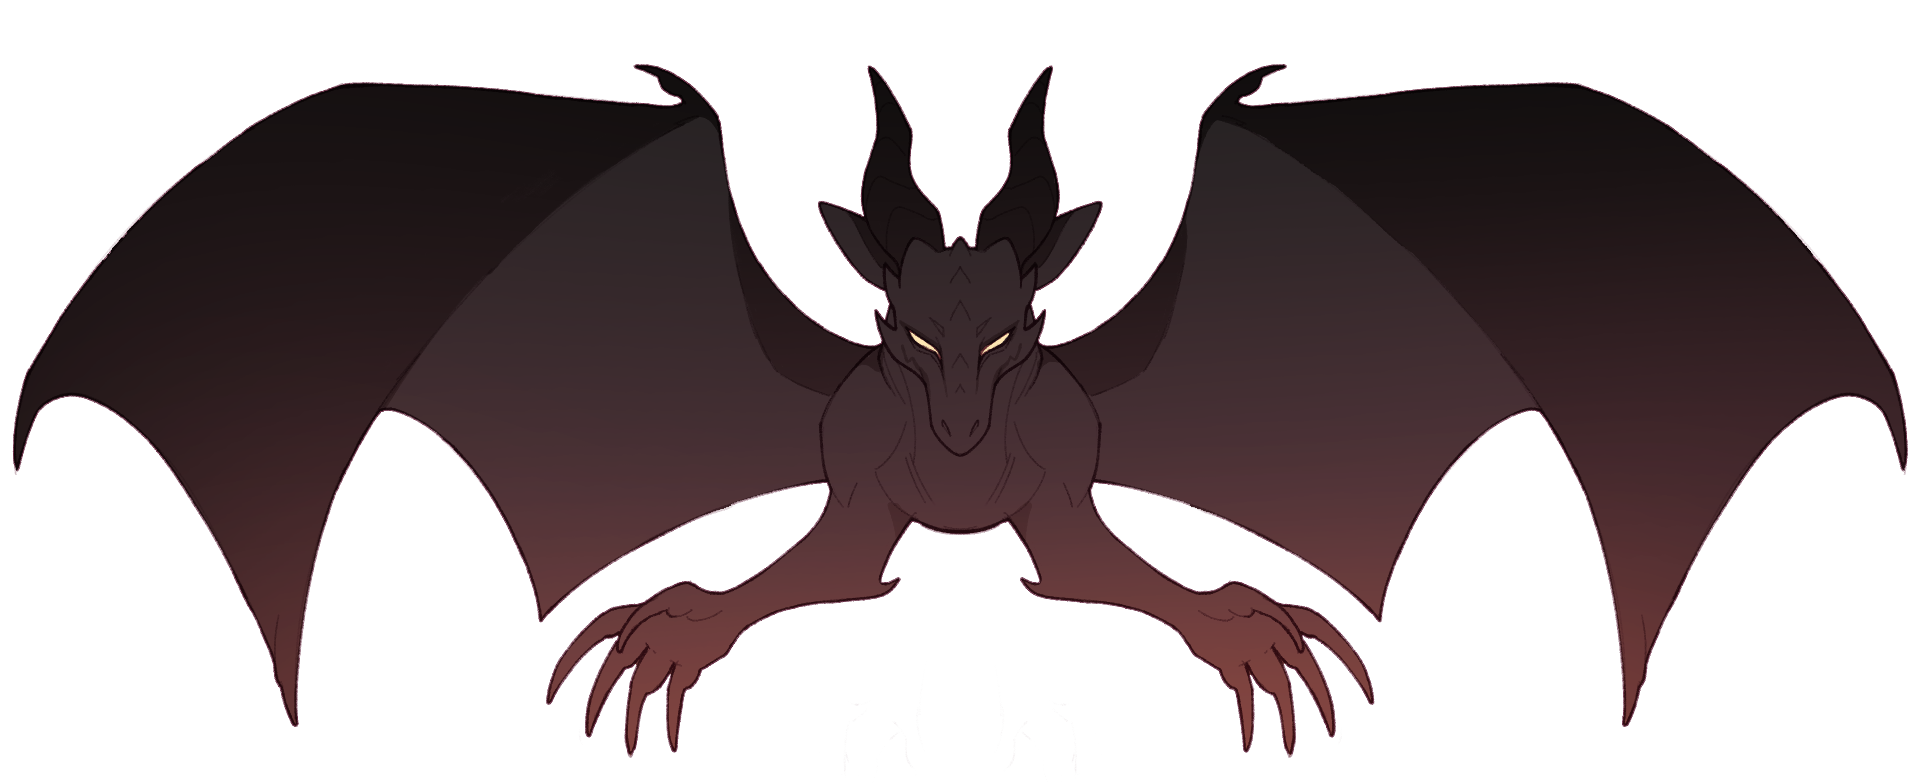 Image of a huge and menacing black dragon